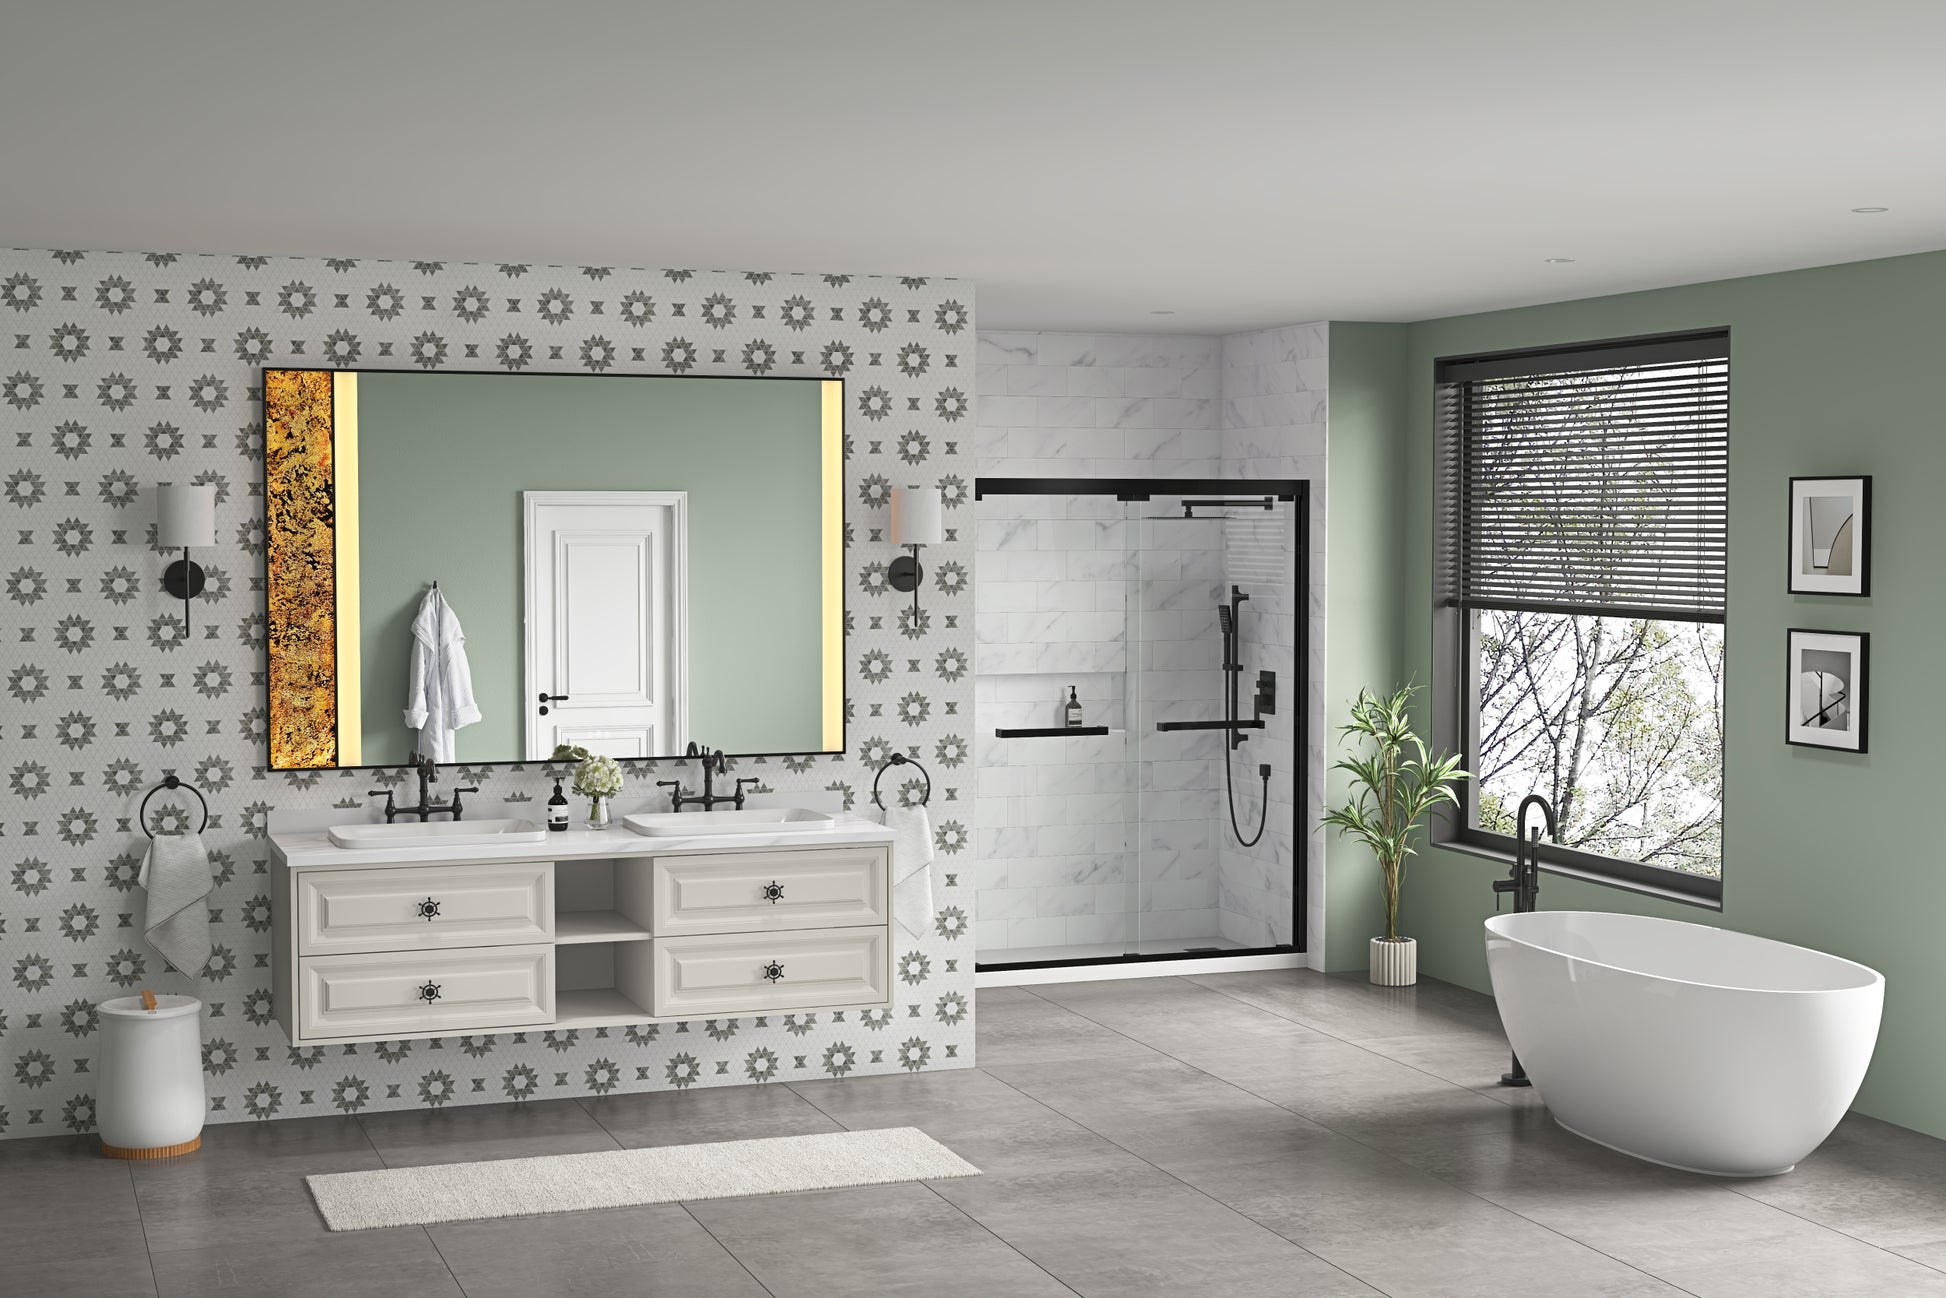 72x 48Inch LED Mirror Bathroom Vanity Mirror with Back matte black-aluminium